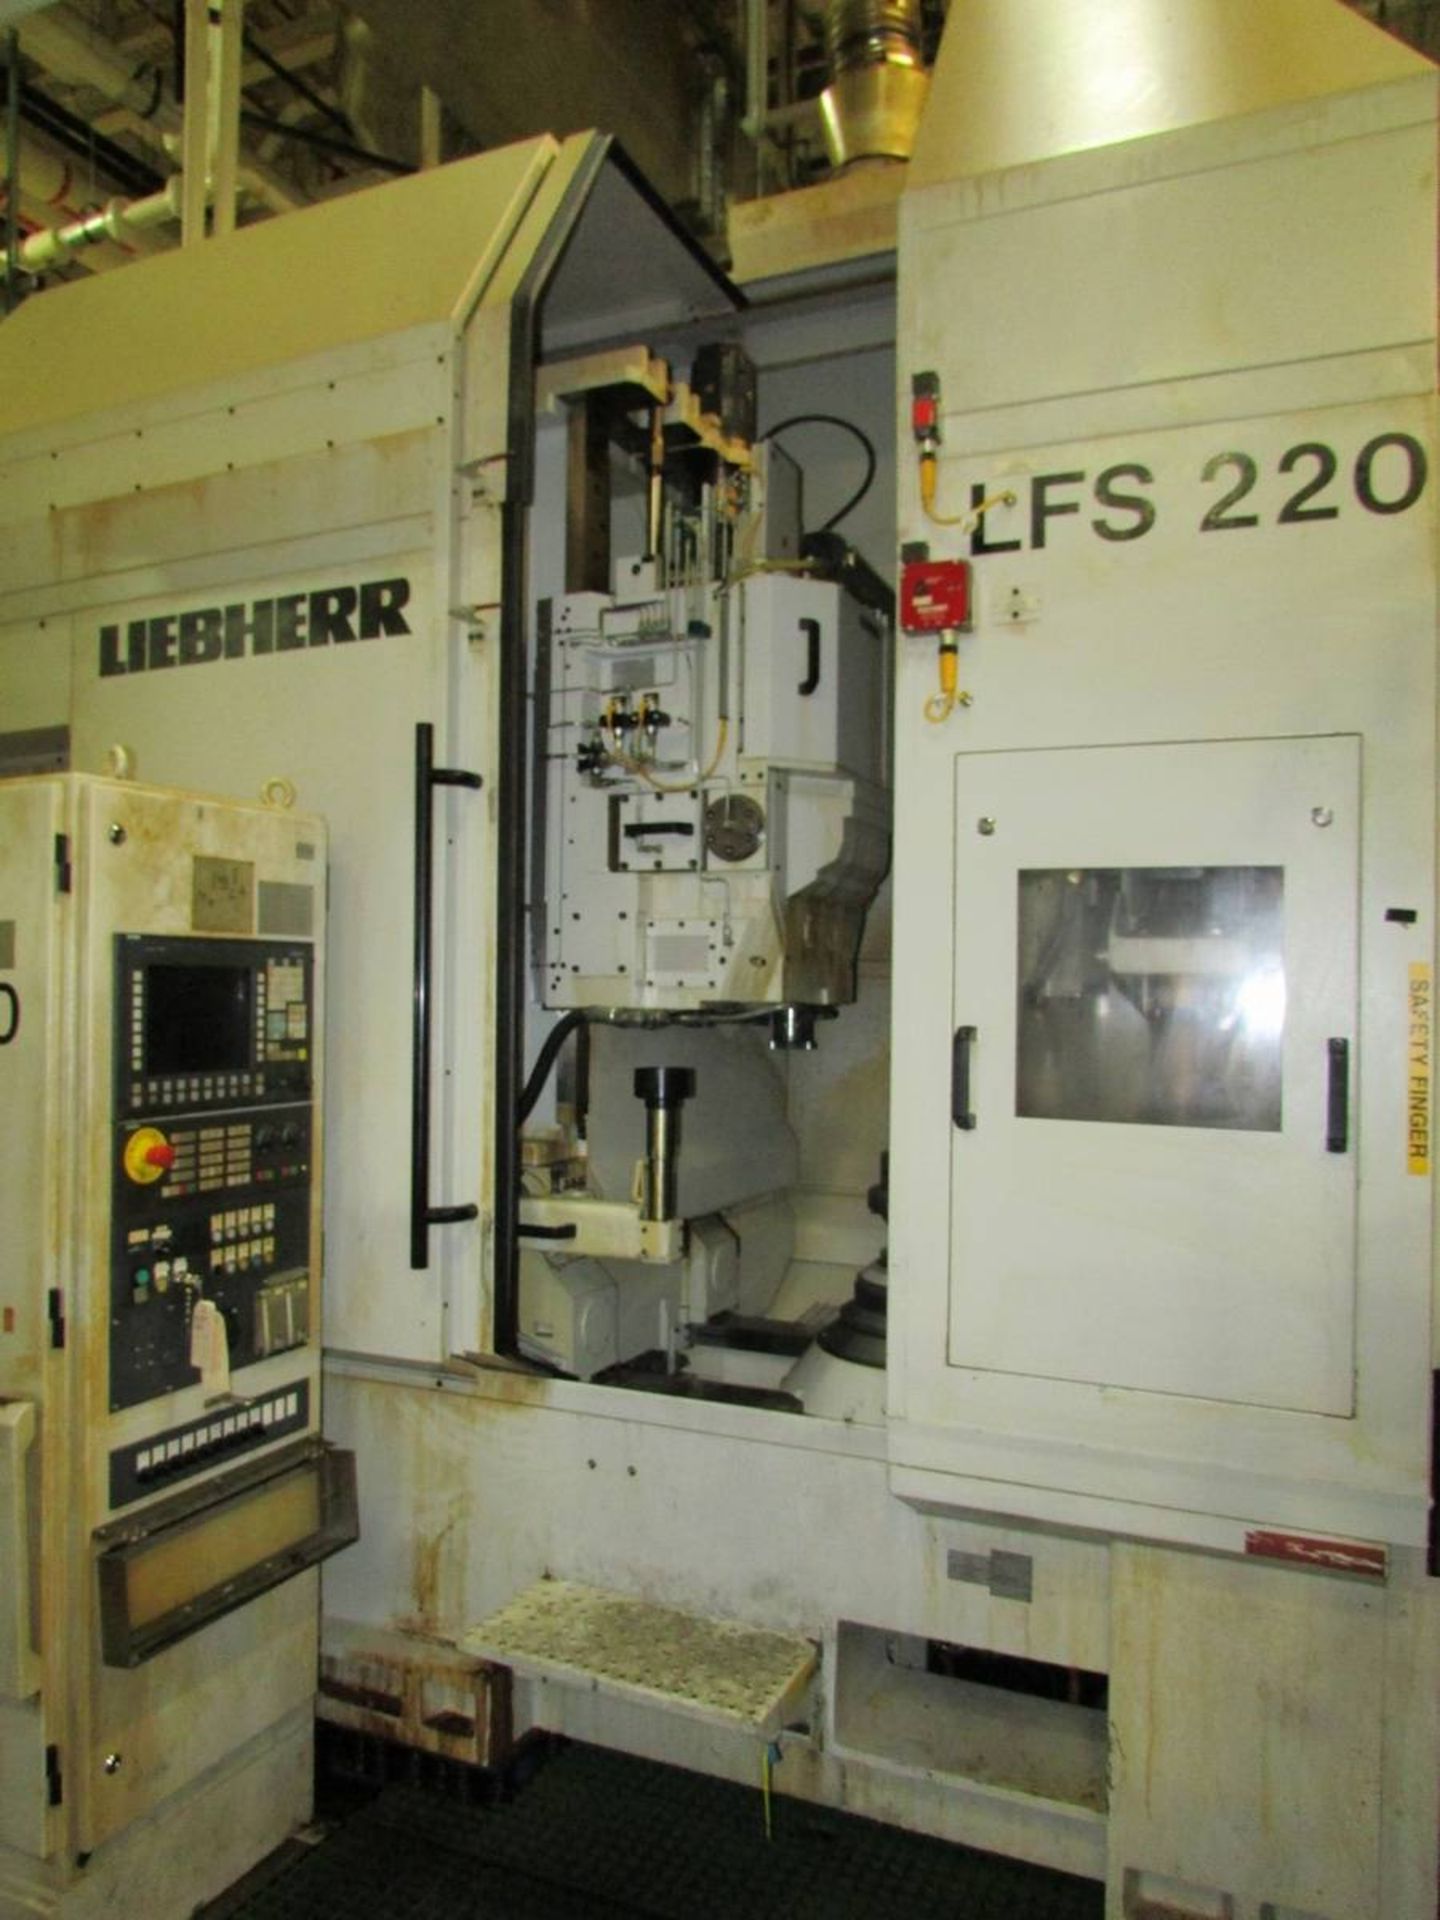 2007 Liebherr LFS 220 CNC Gear Shaping Machine - Image 2 of 19